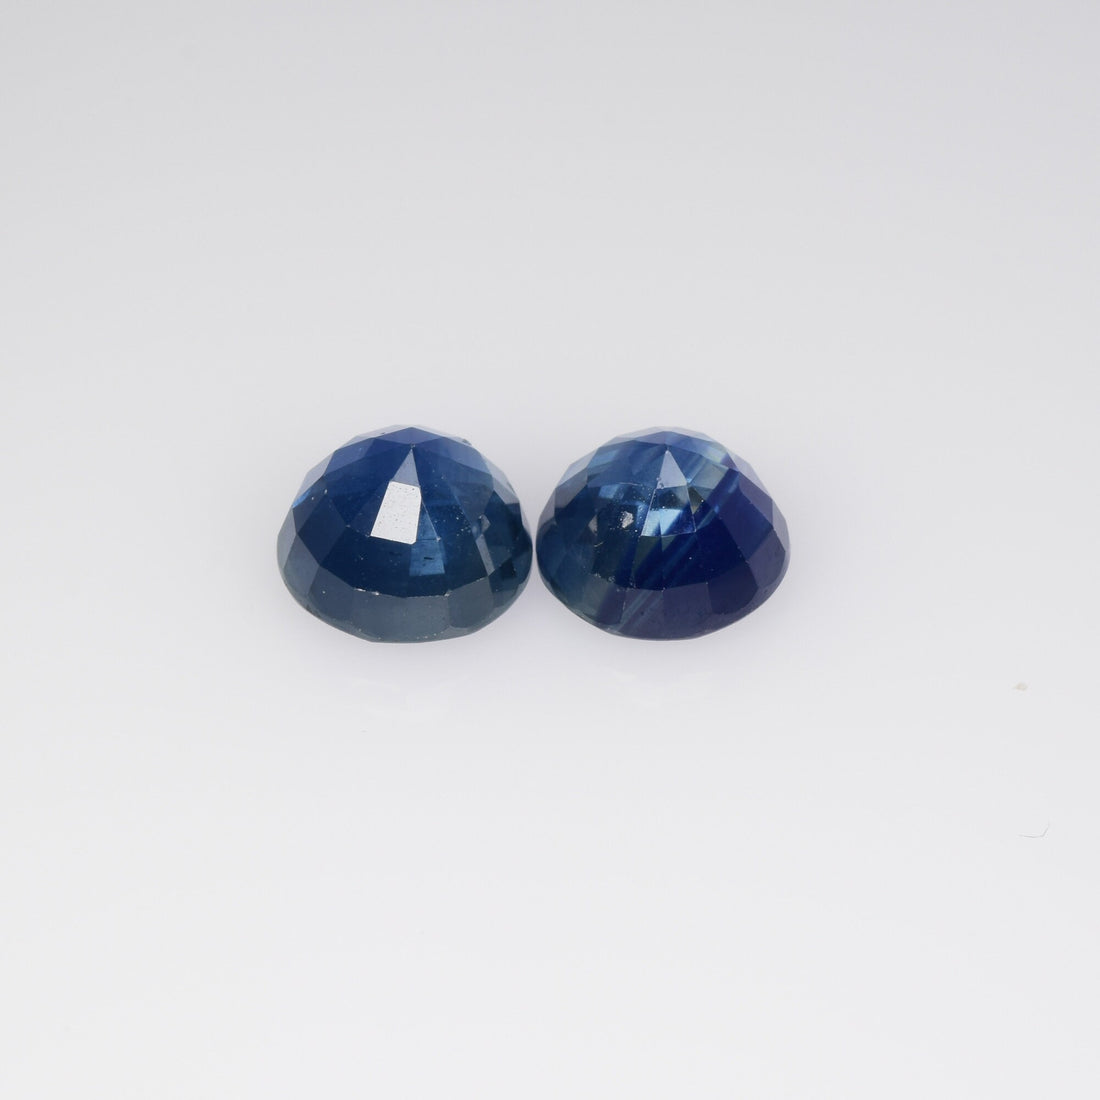 7 MM Natural Blue Sapphire Loose Pair Gemstone Round Cut